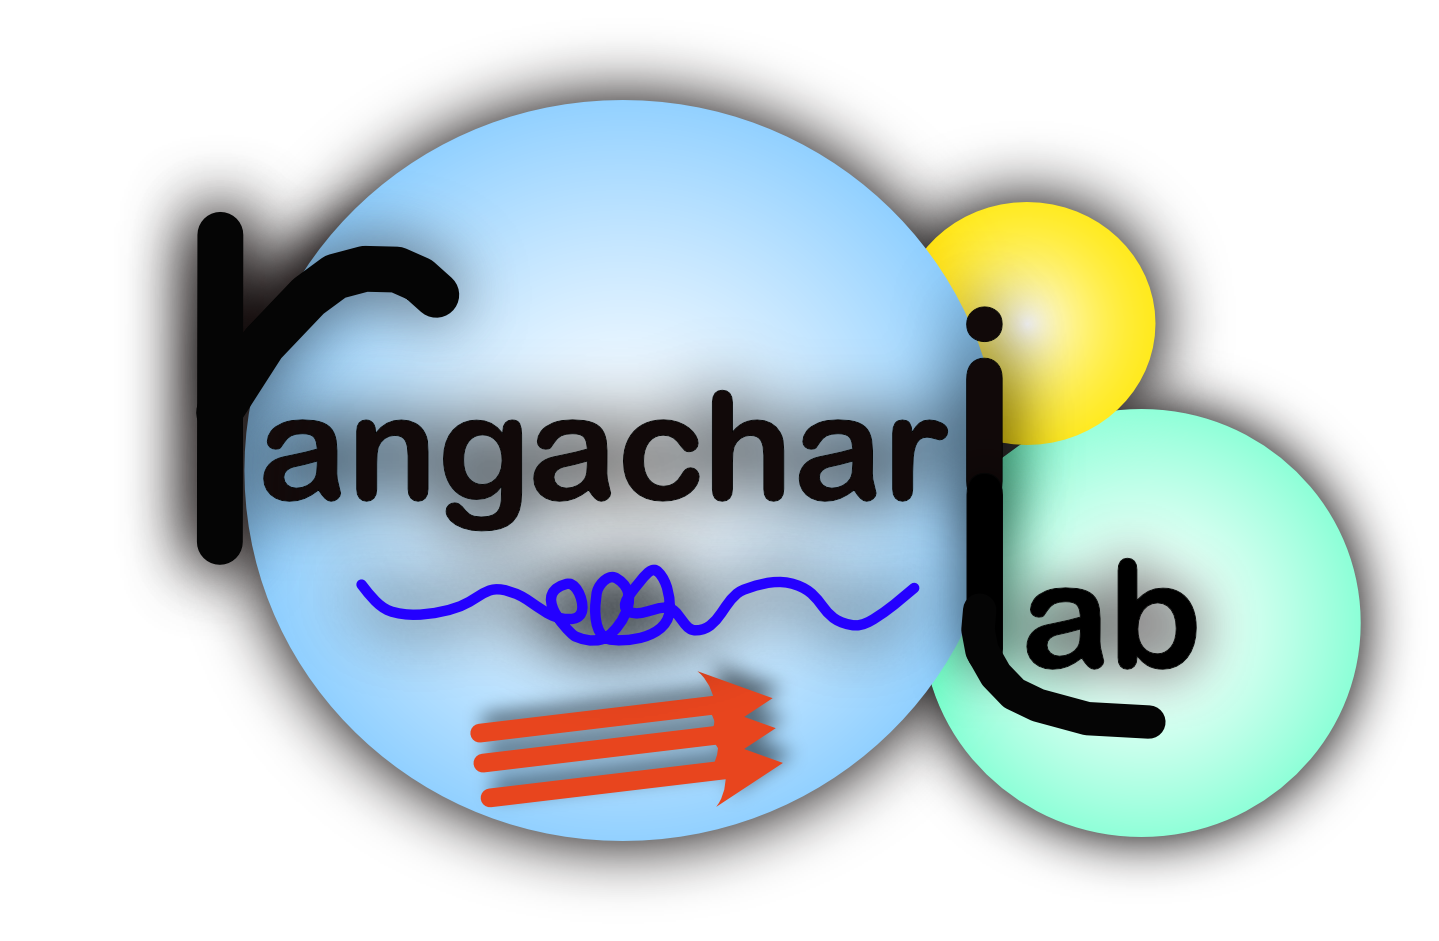 www.rangacharilab.com